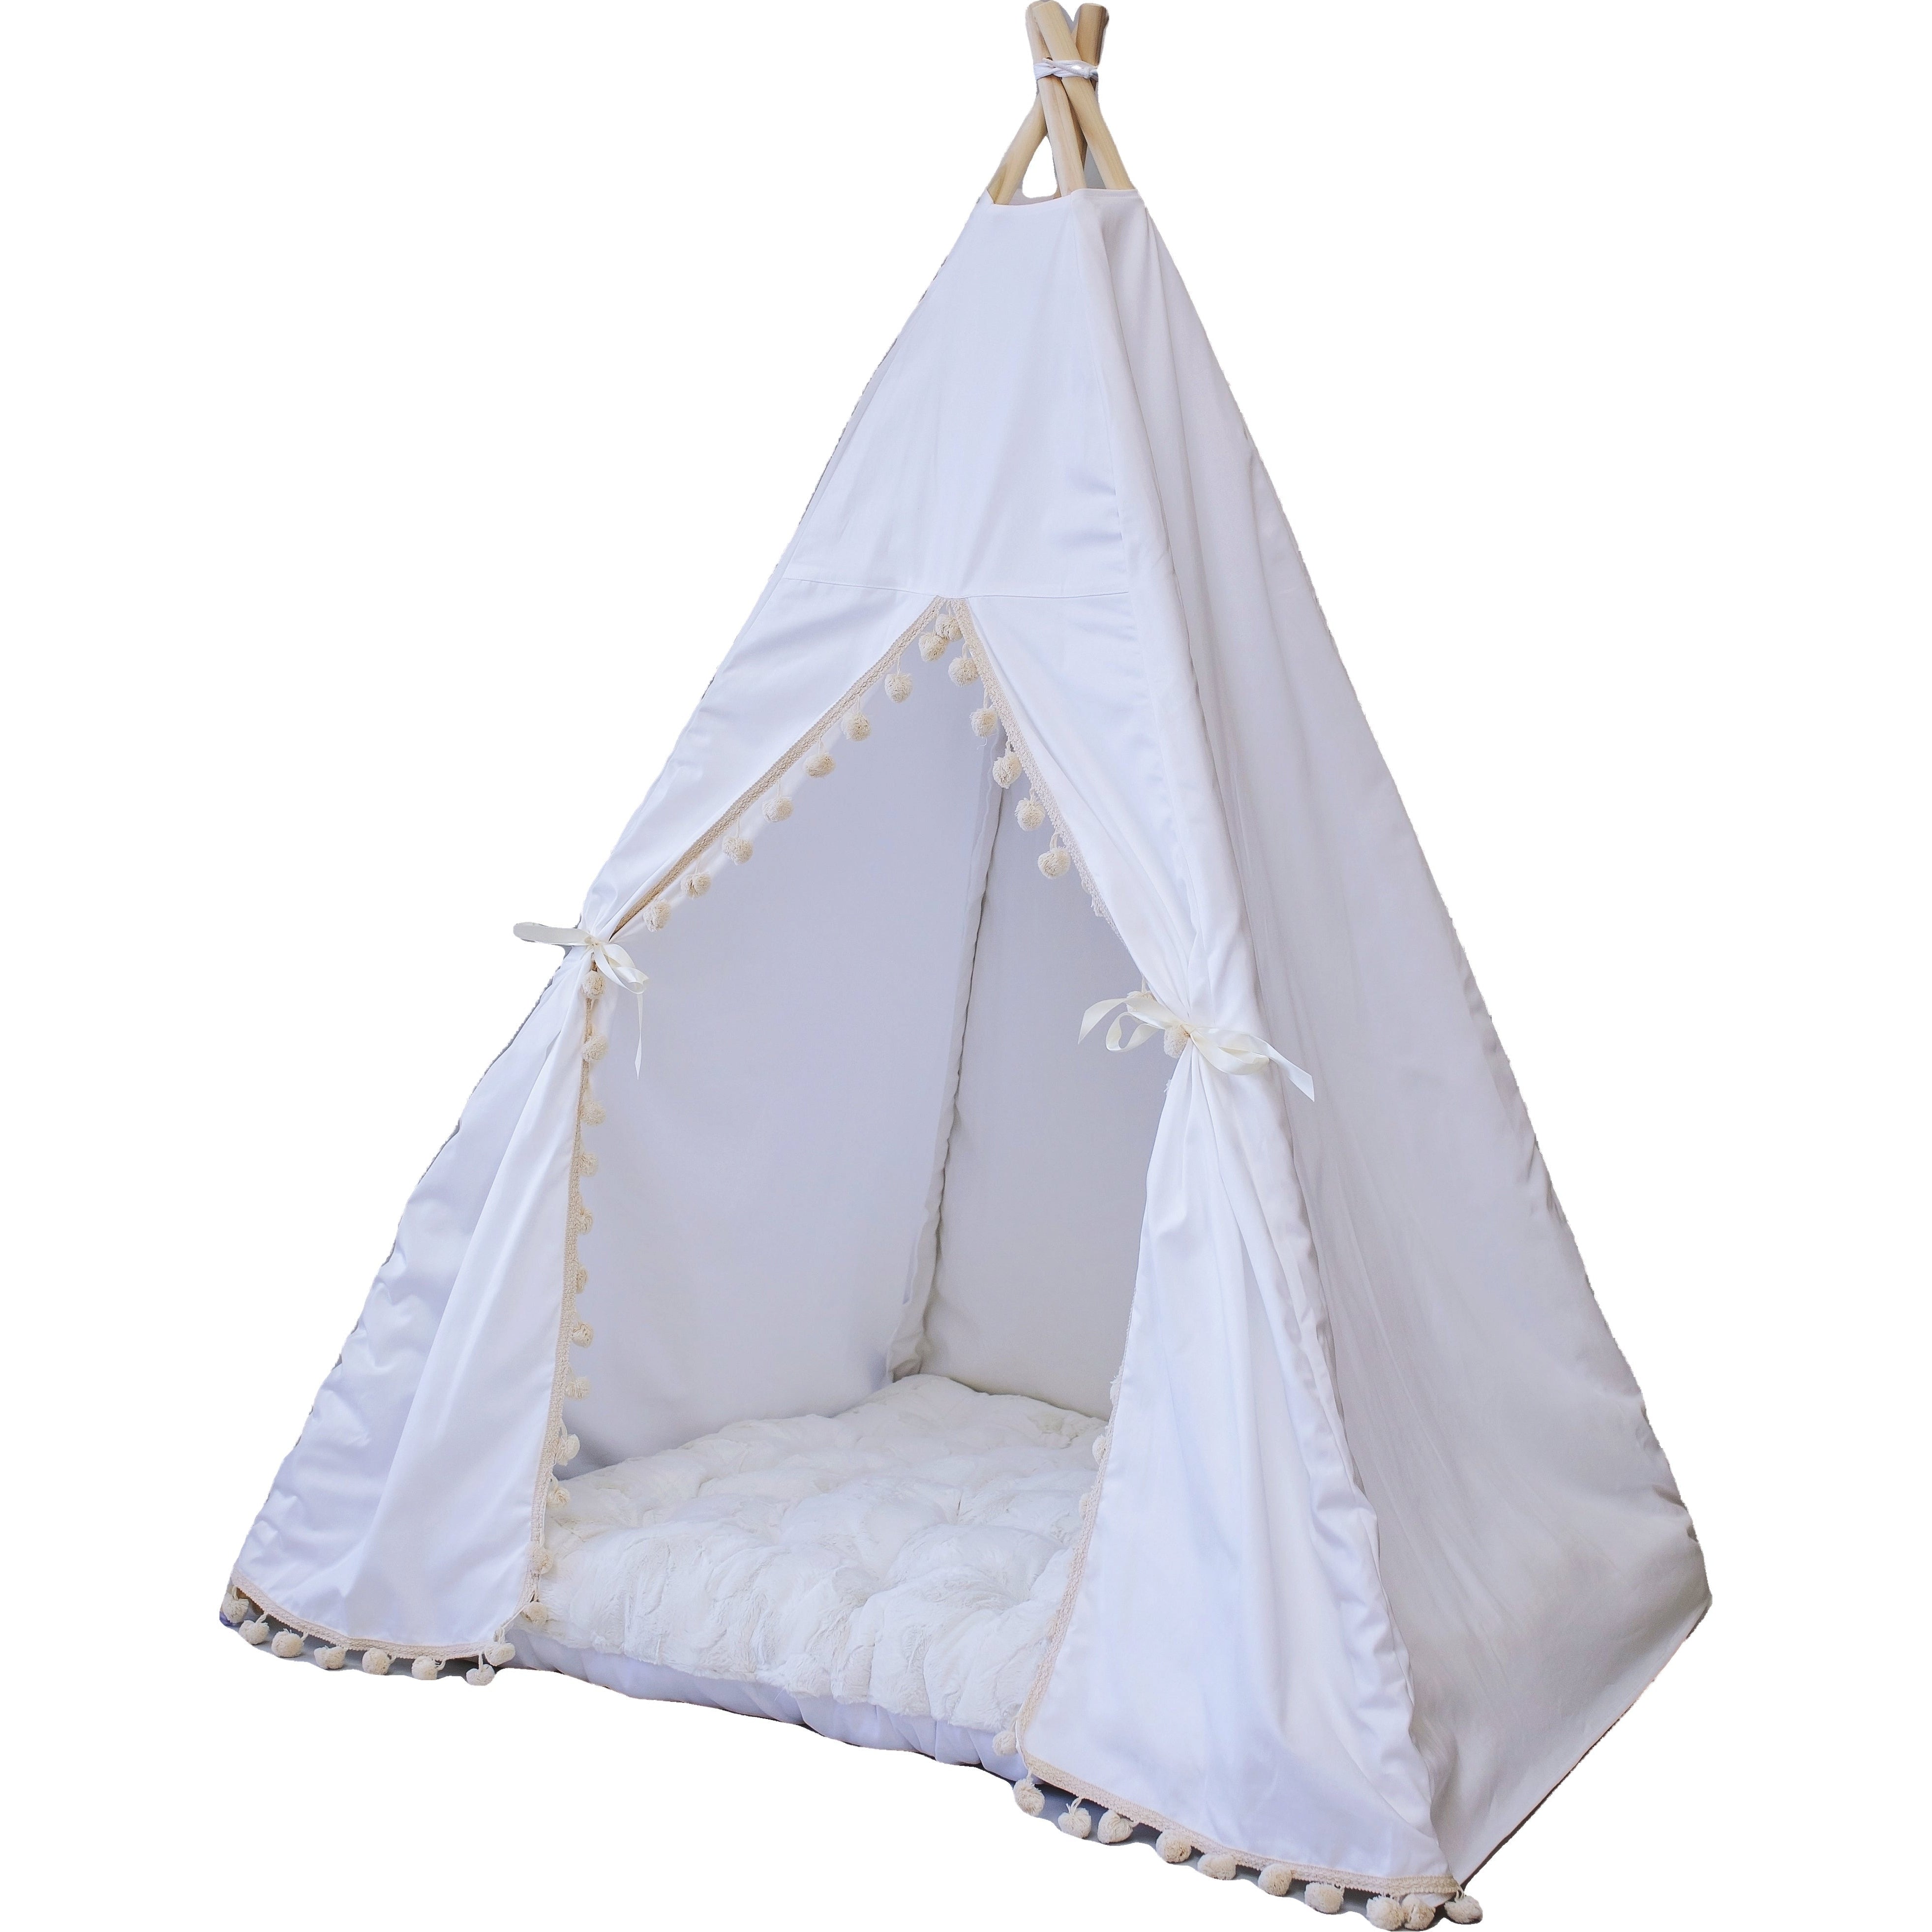 The Skylar Play Tent